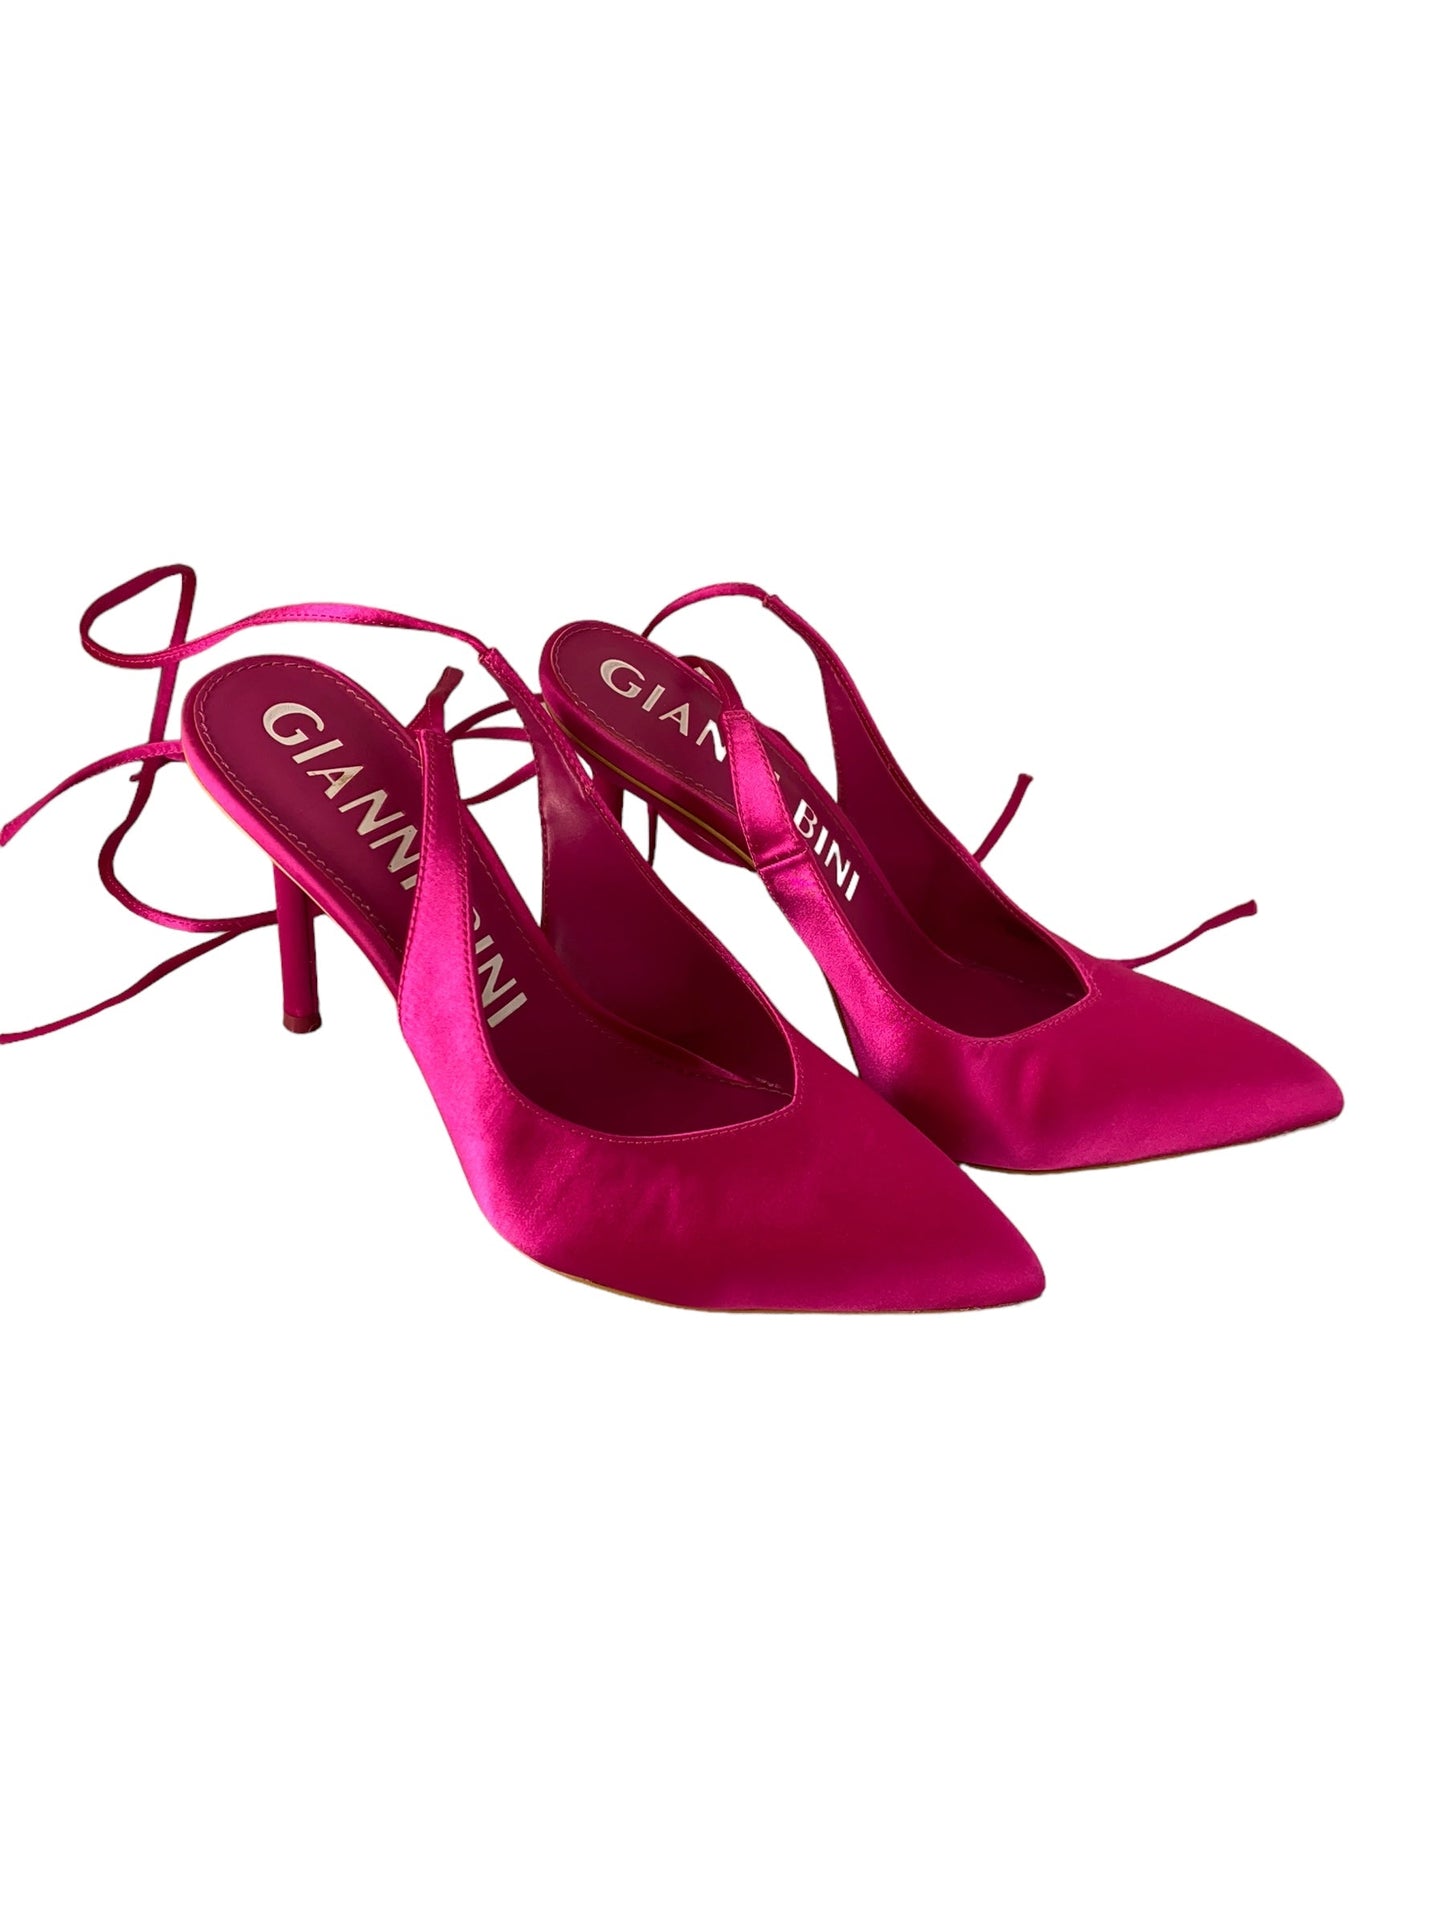 Pink Shoes Heels Stiletto Giani Bernini, Size 10